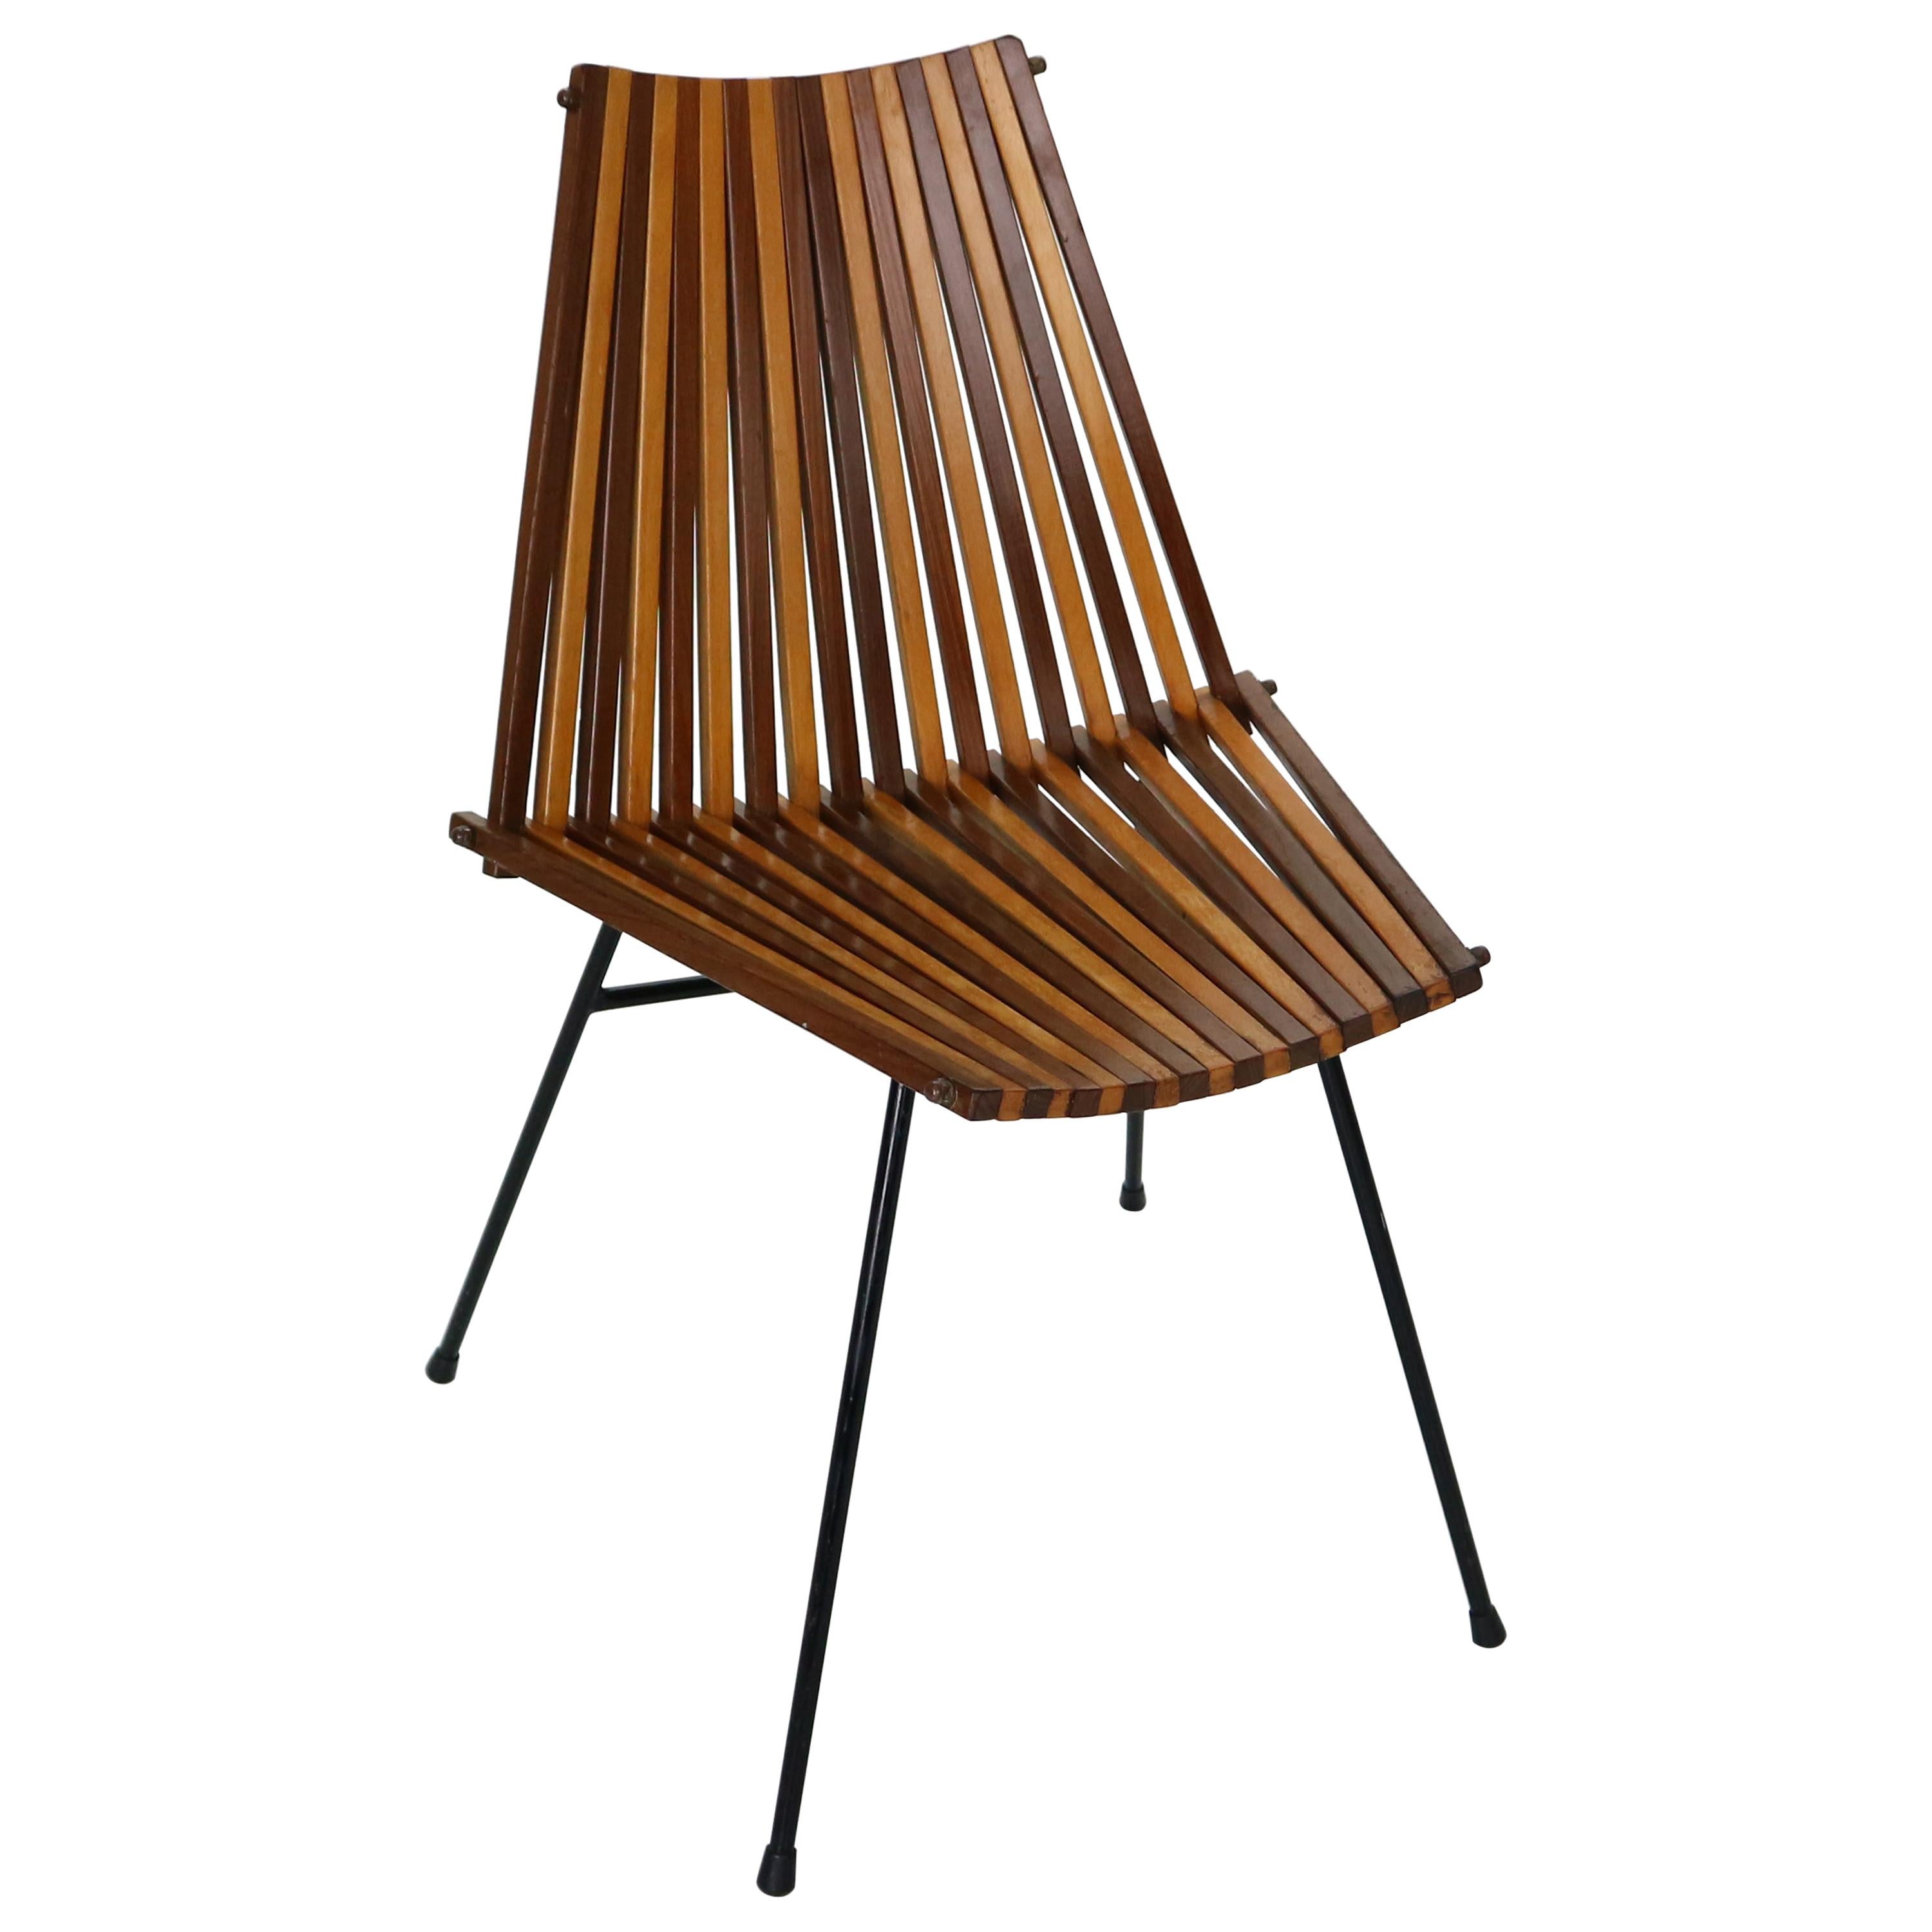 Dutch Modernist Chair by Dirk van Sliedregt for Rohé Noordwolde, 1960s